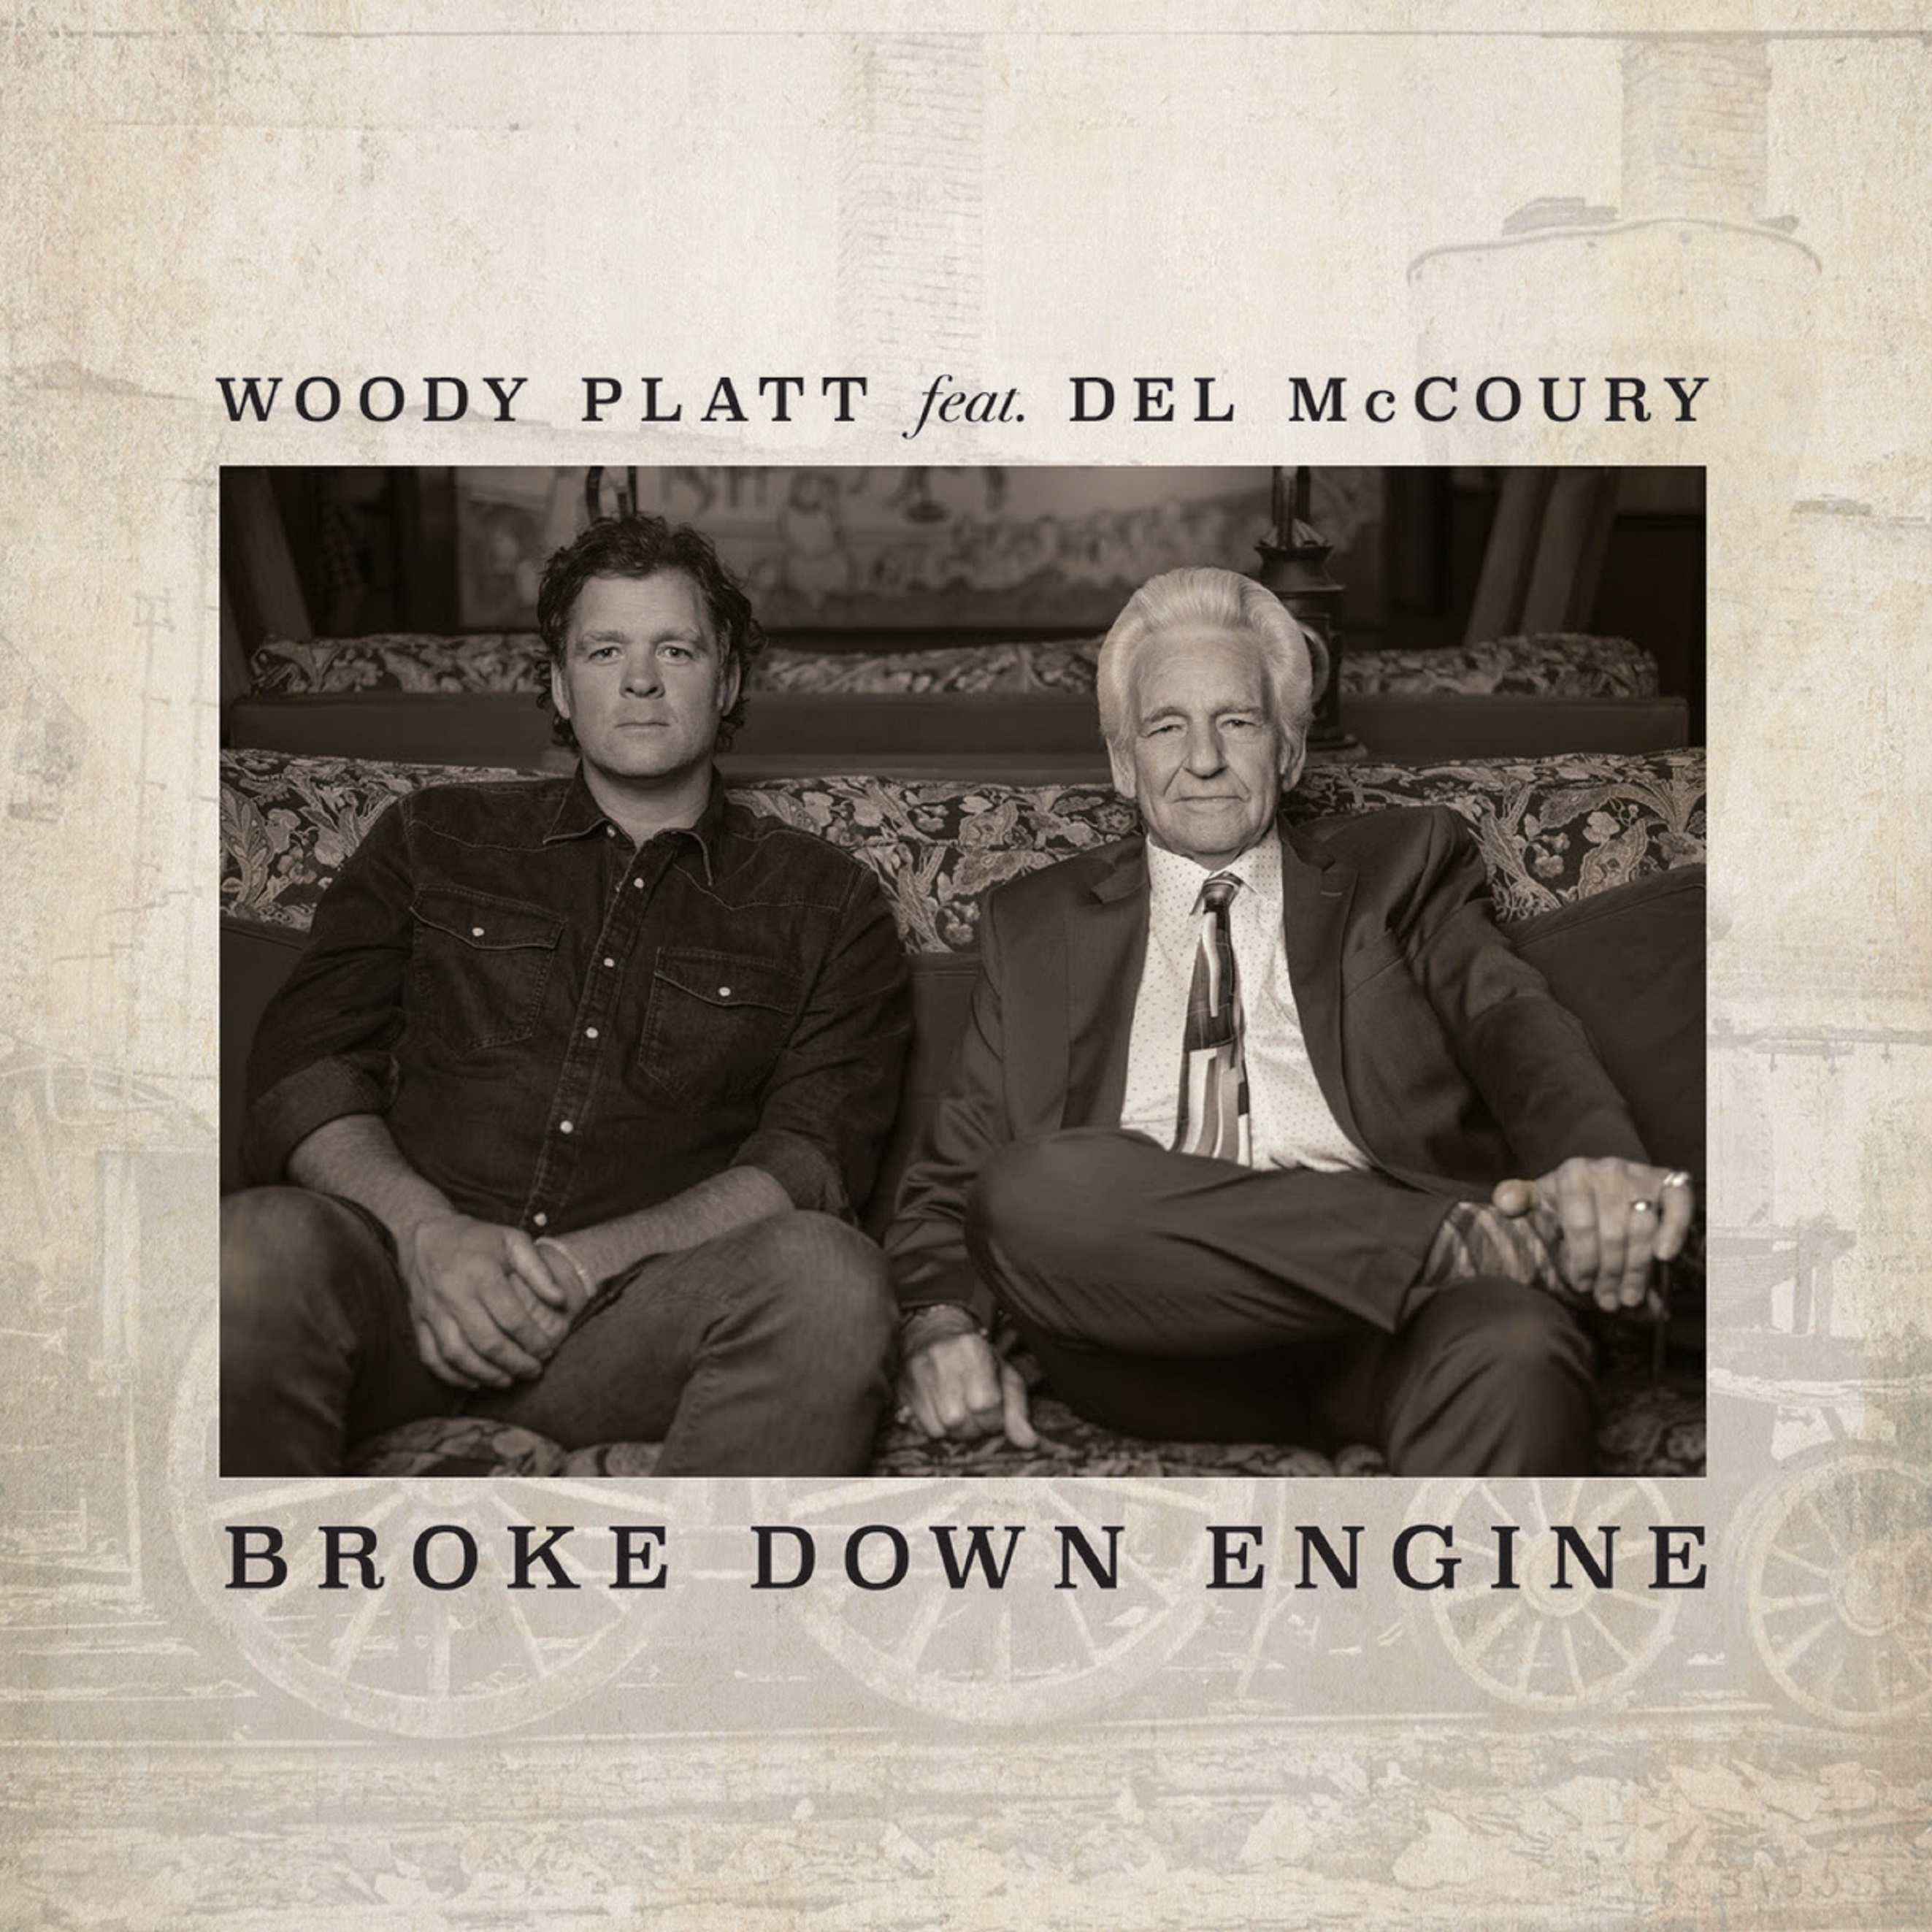 Woody Platt and Del McCoury team up on "Broke Down Engine"